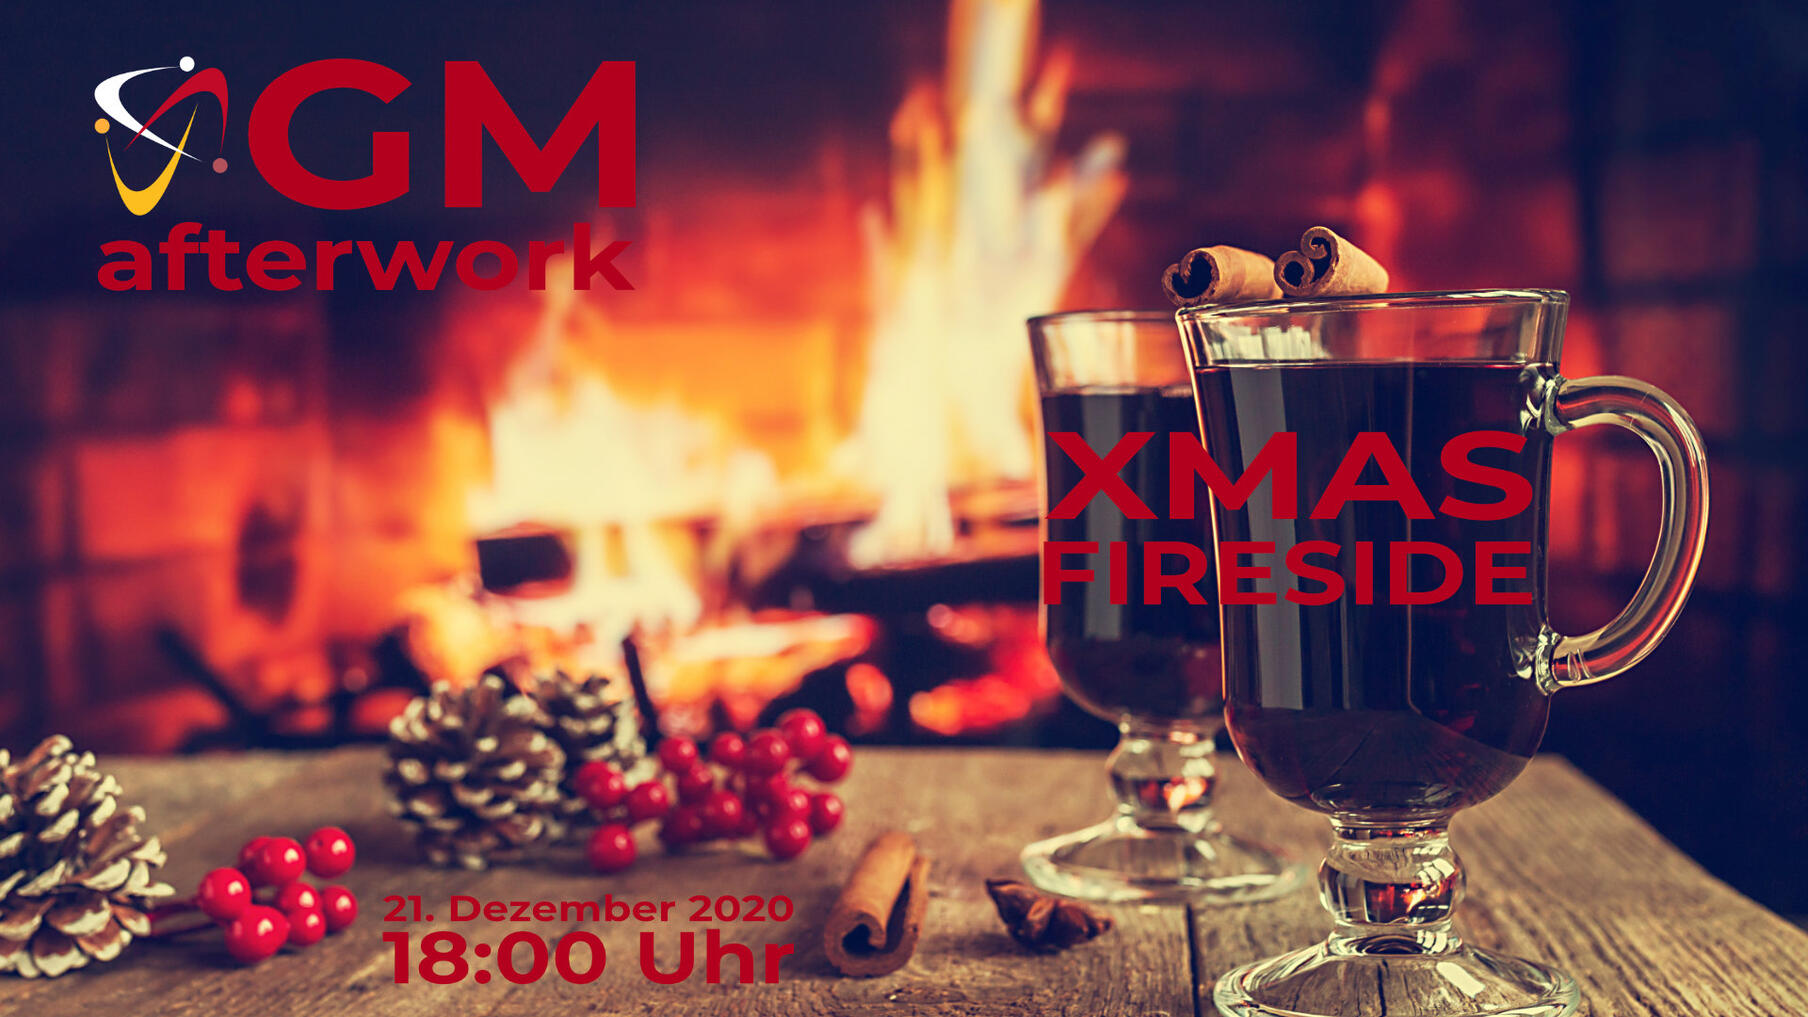 #GMafterwork | XMAS Fireside Talk